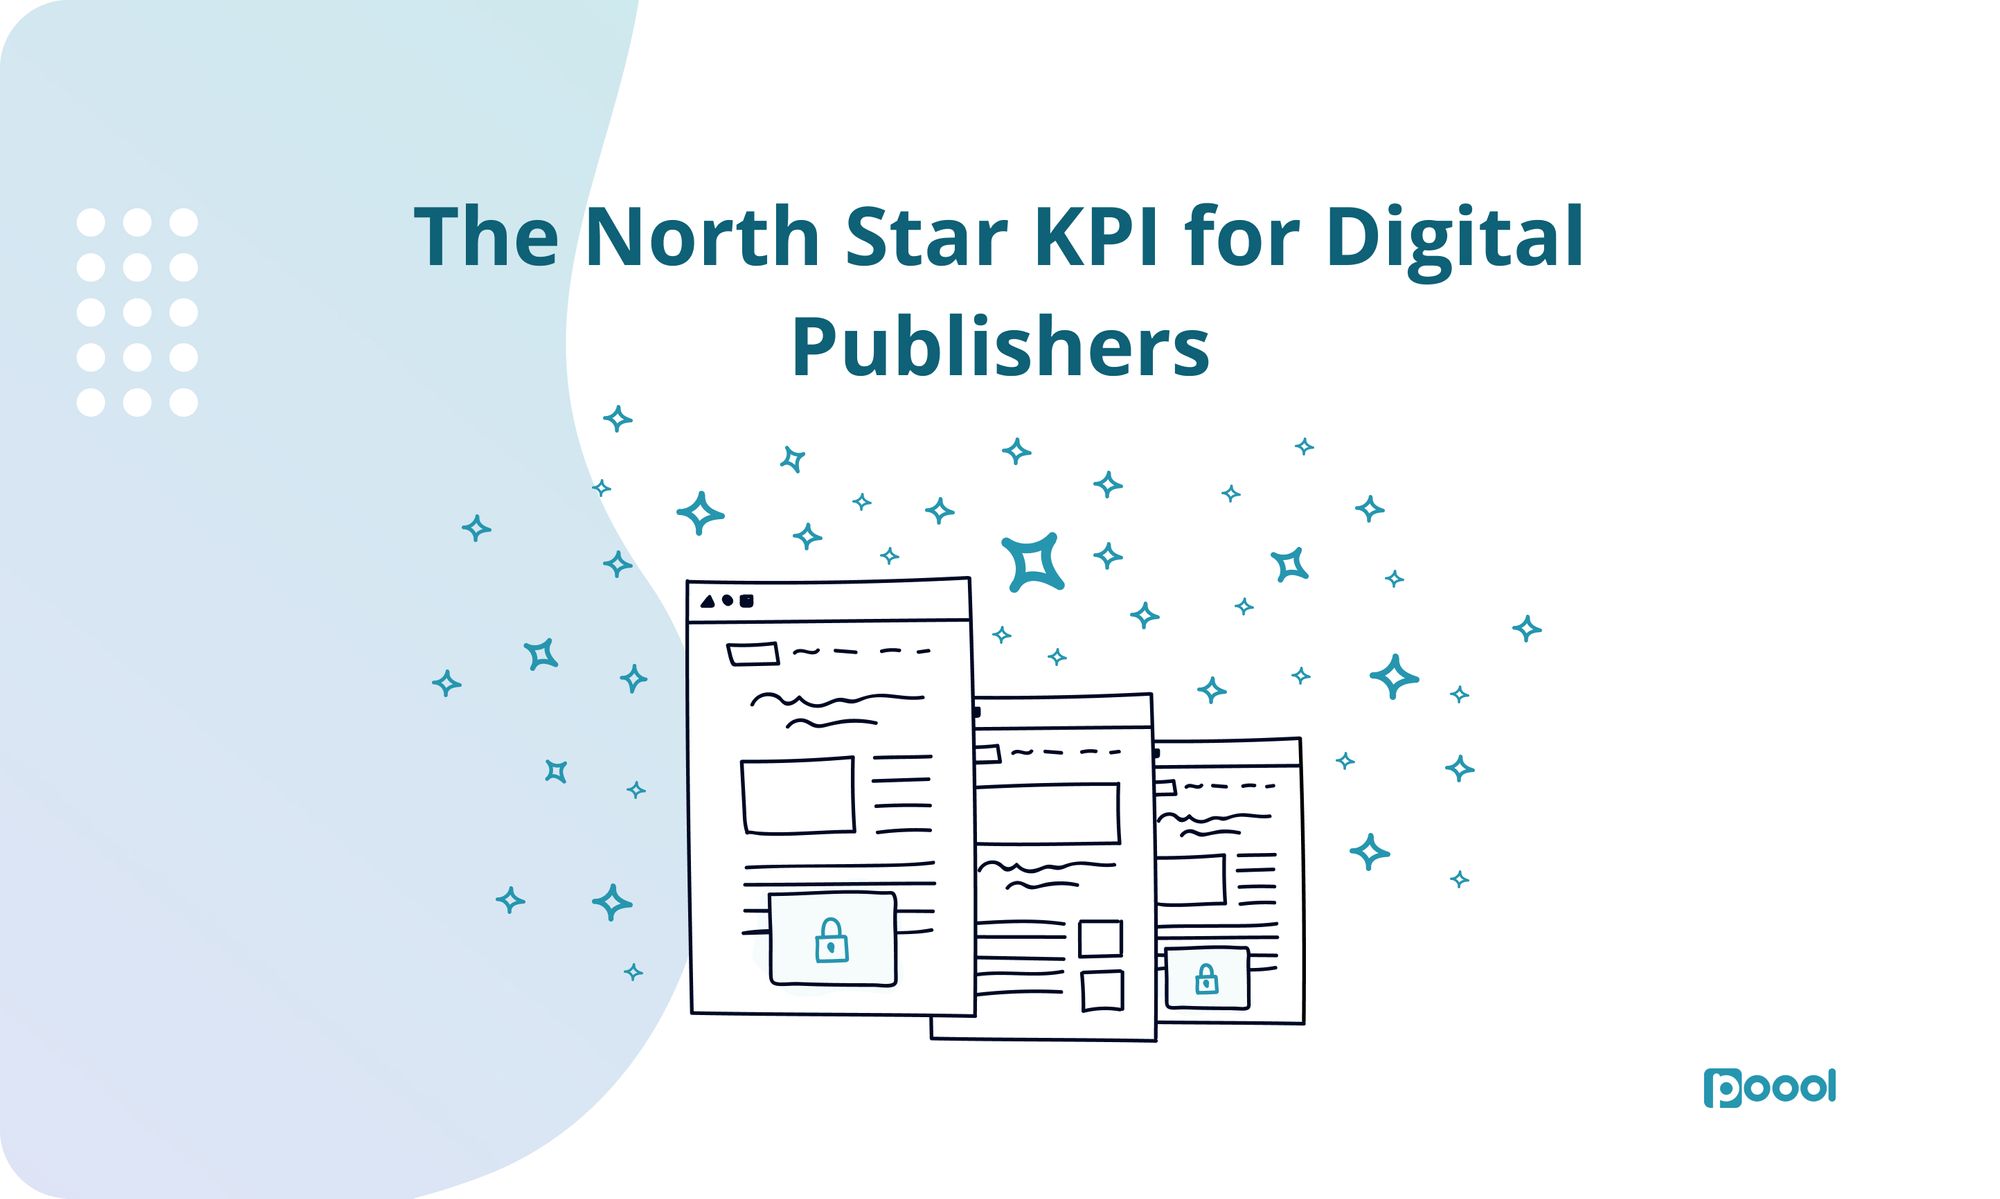 The North Star KPI for Digital Publishers.